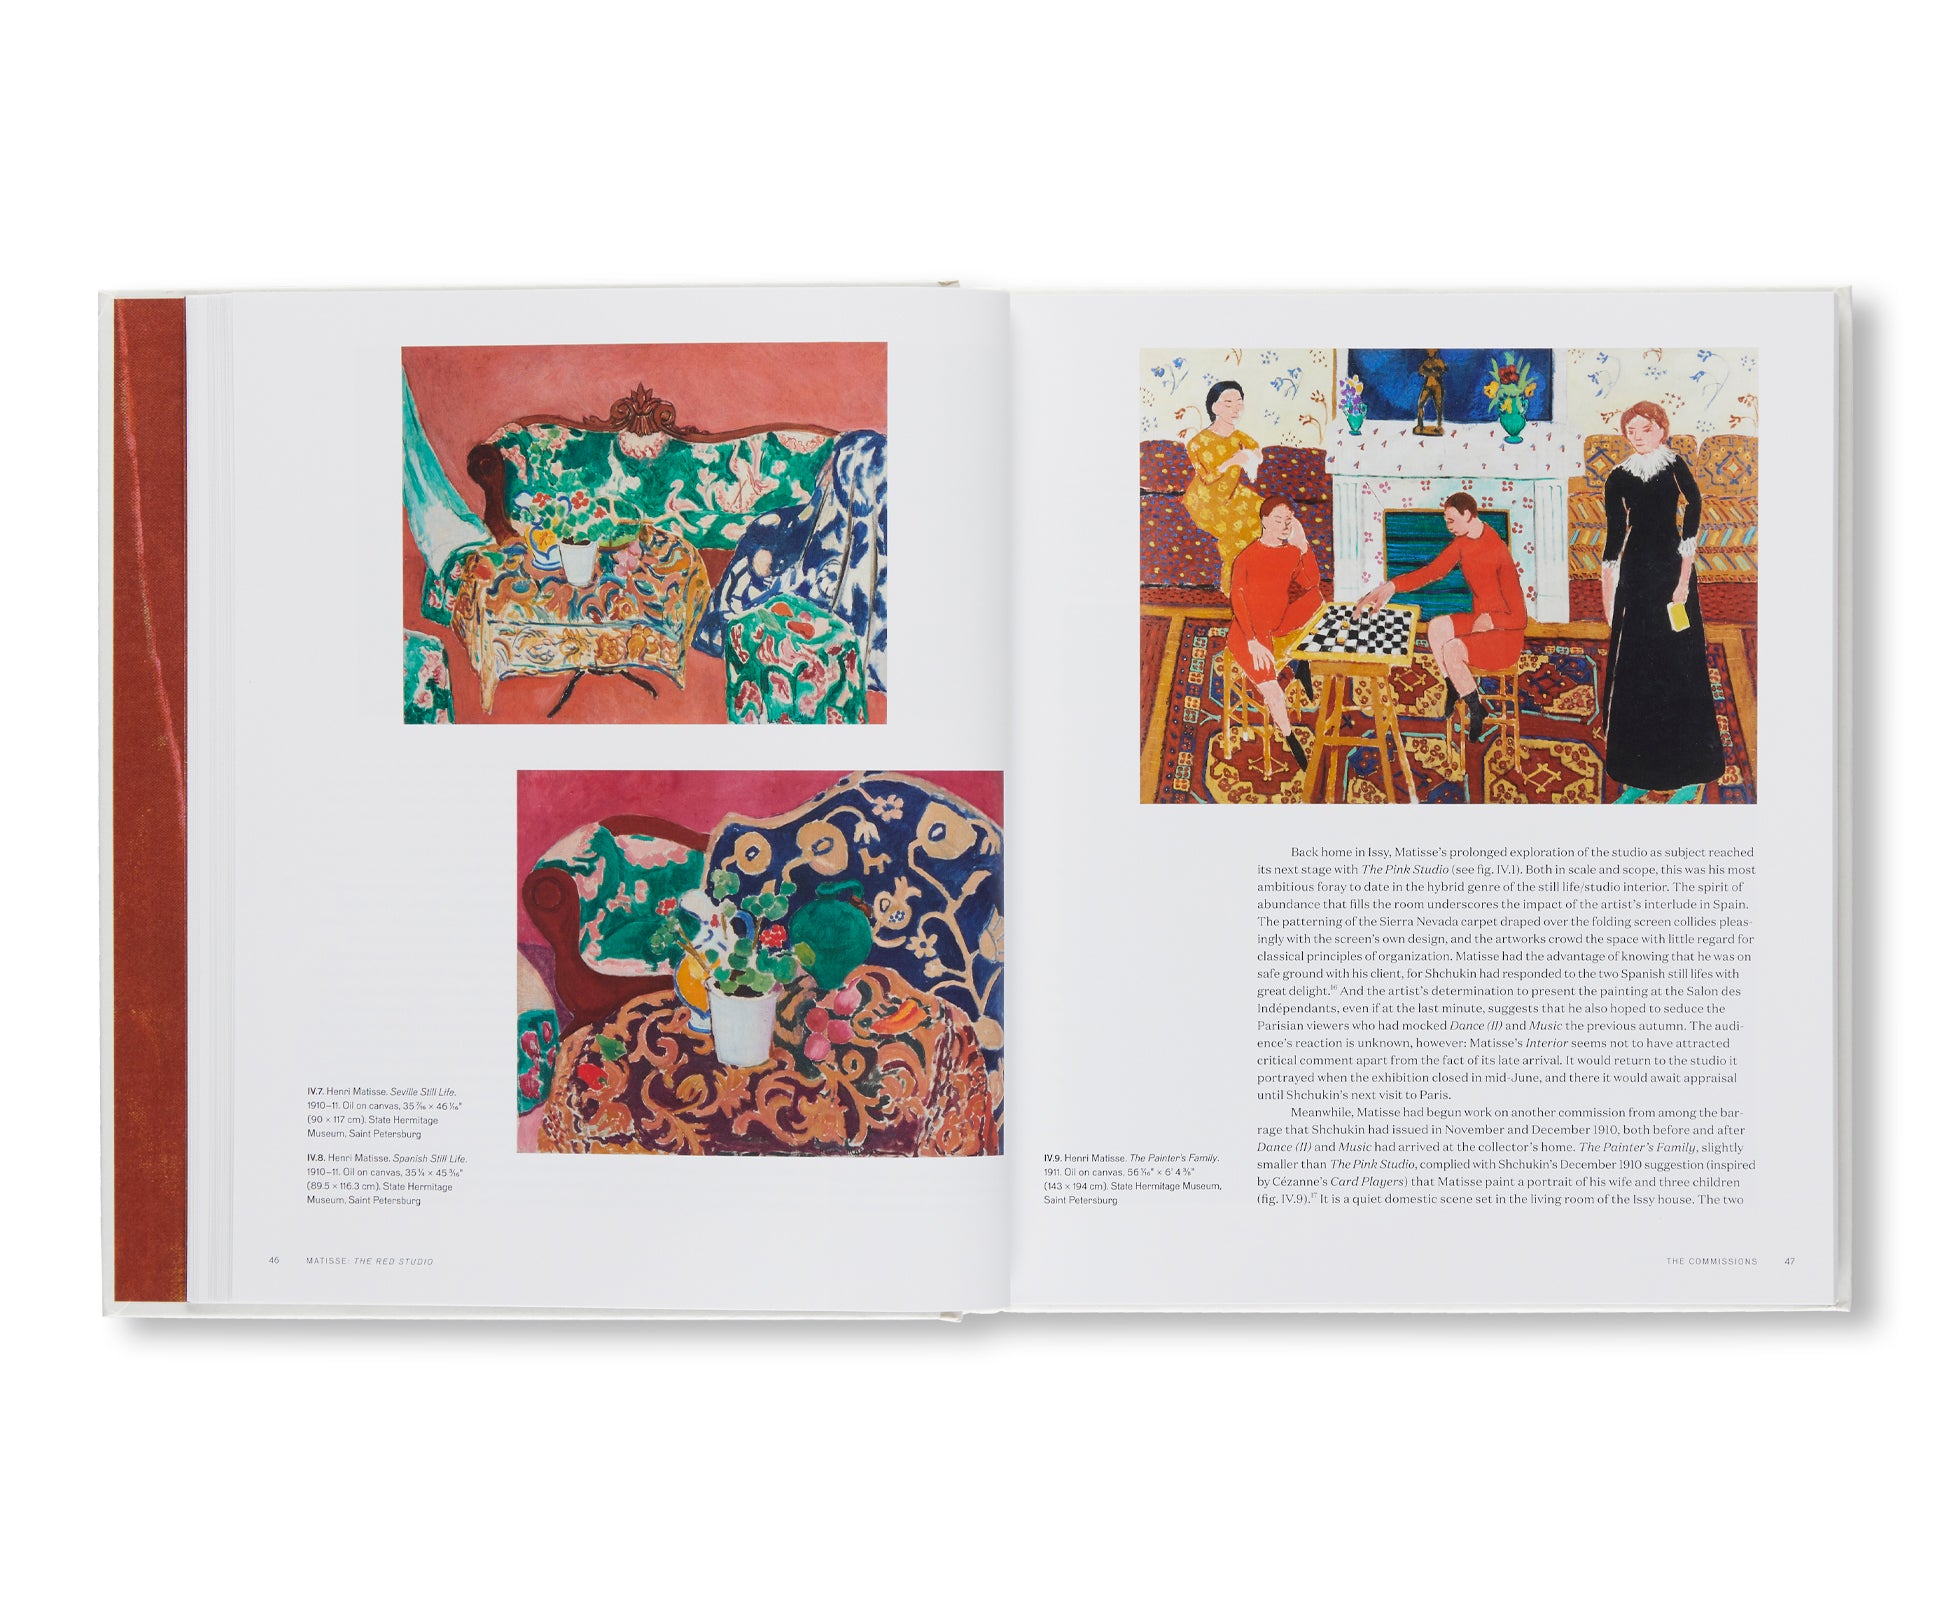 MATISSE: THE RED STUDIO by Henri Matisse